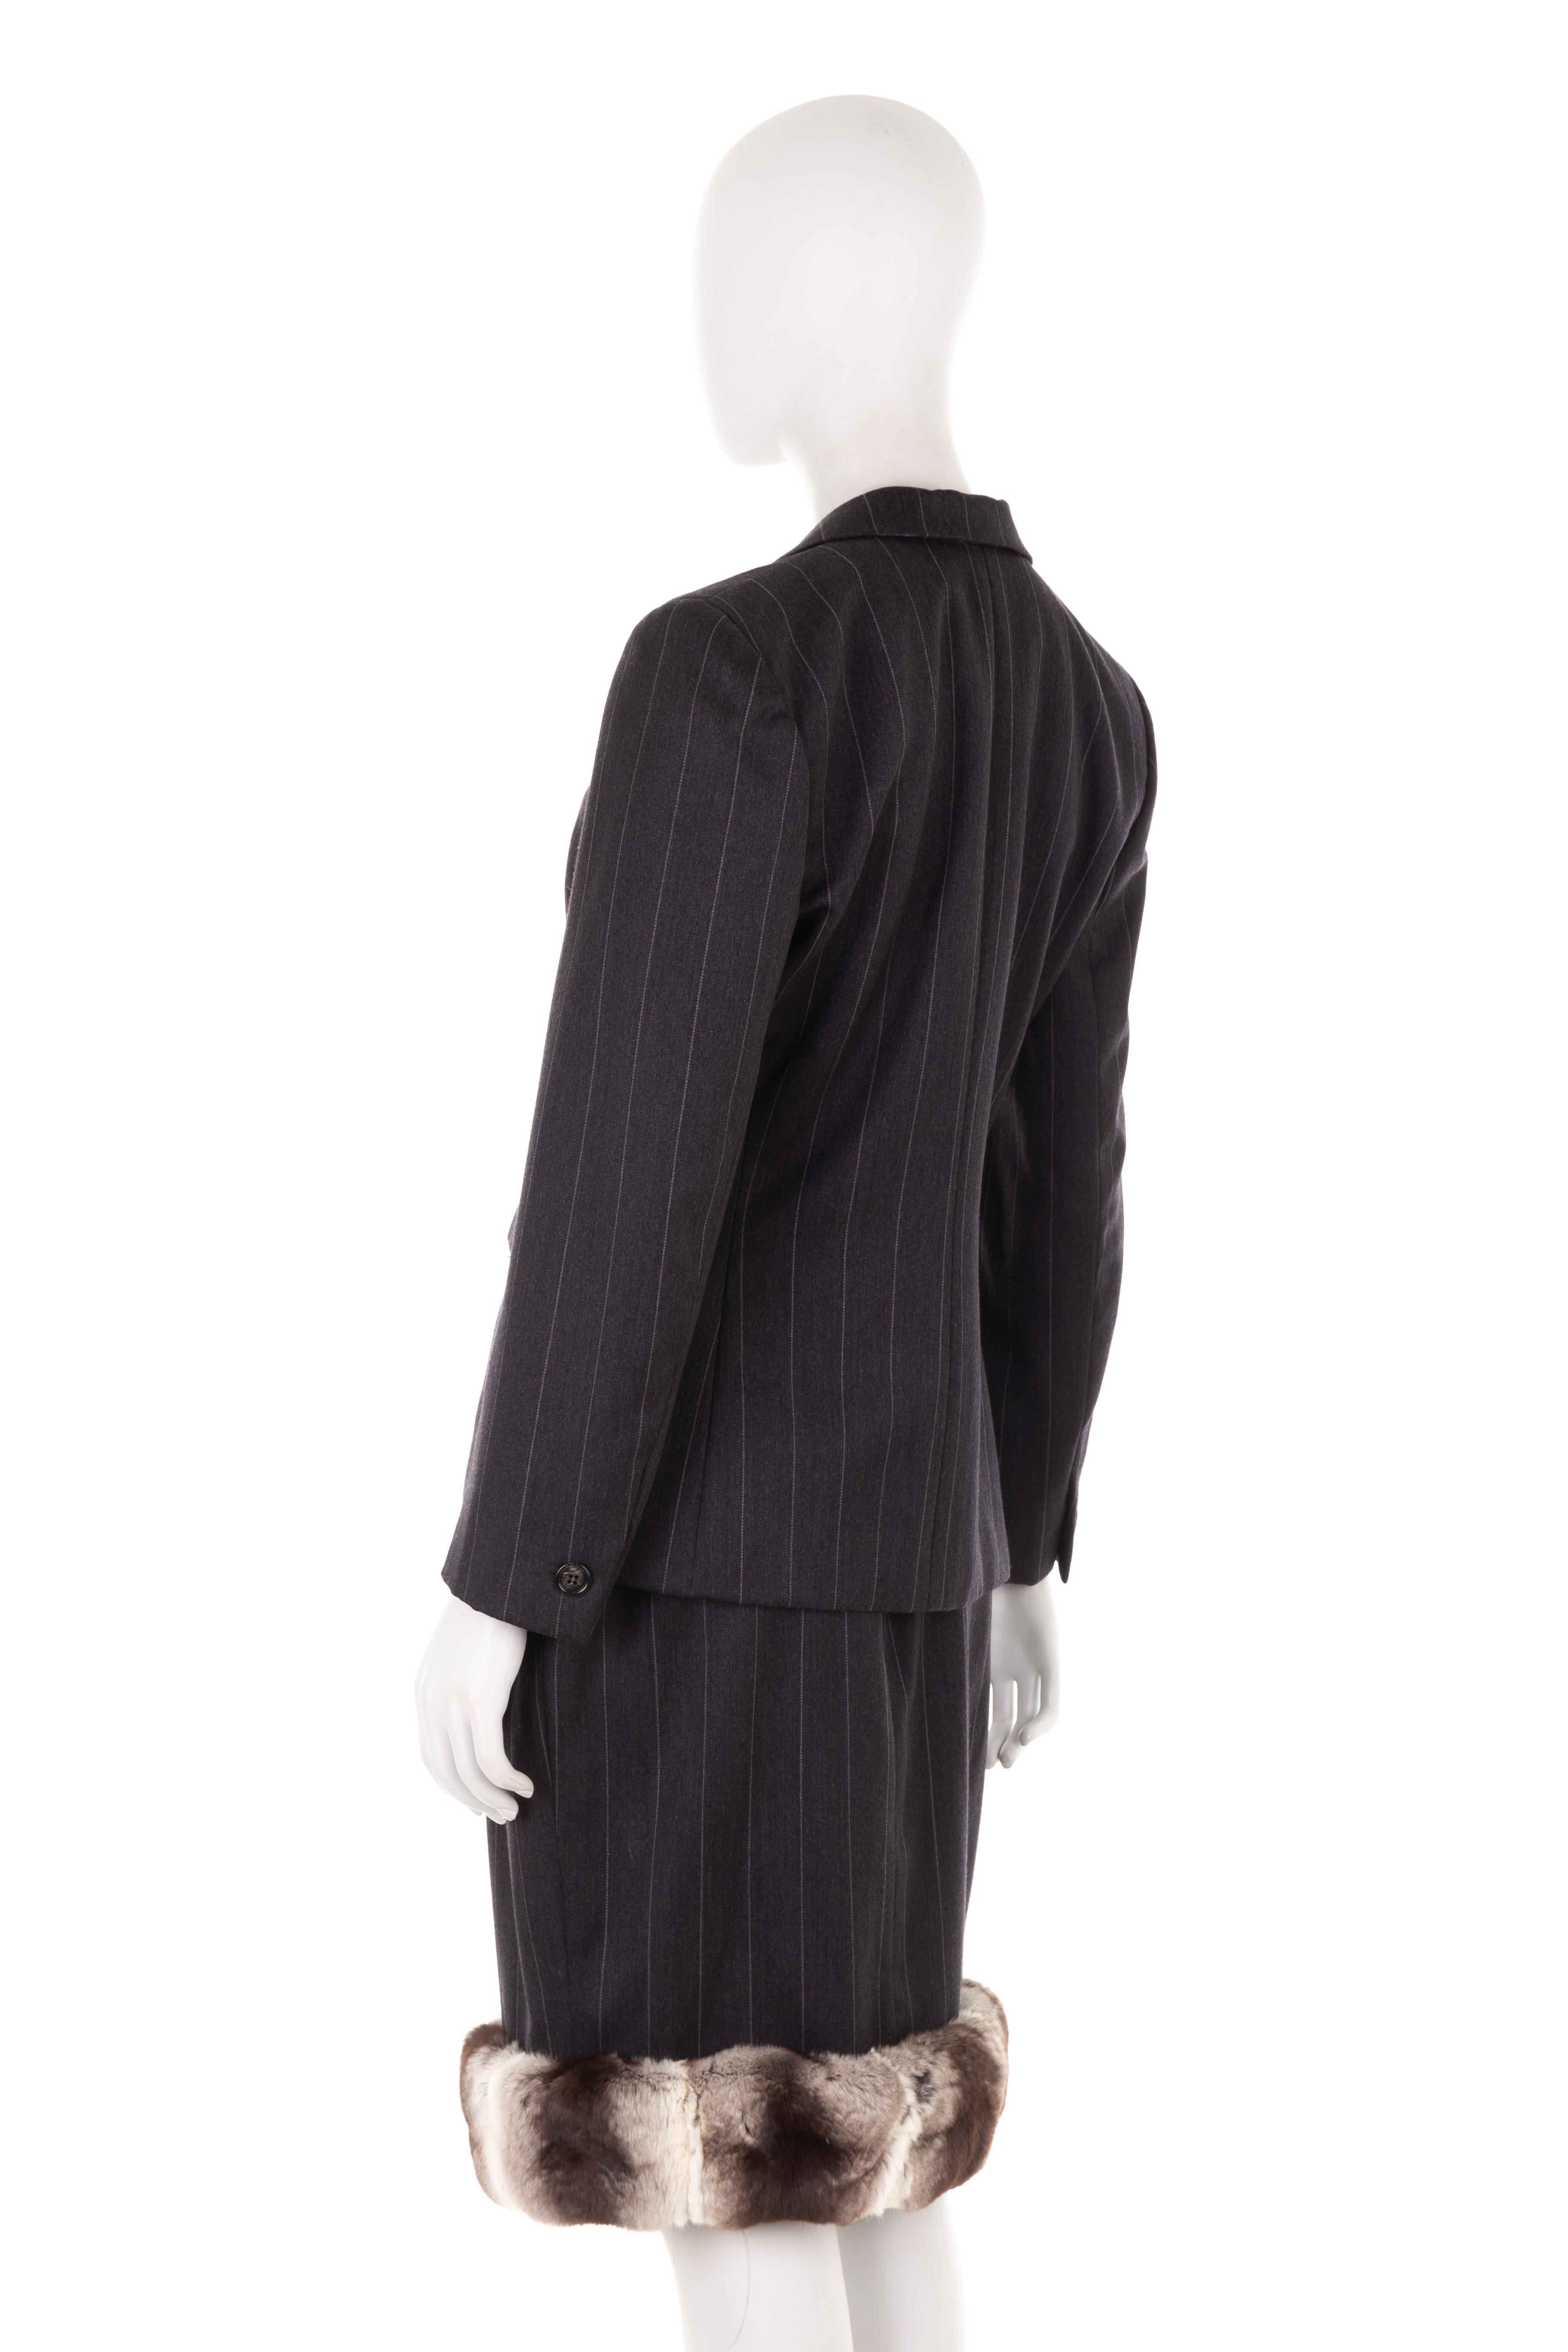 Women's Christian Dior by Marc Bohan F/W 1987 grey pinstripe Chinchilla fur skirt suit For Sale